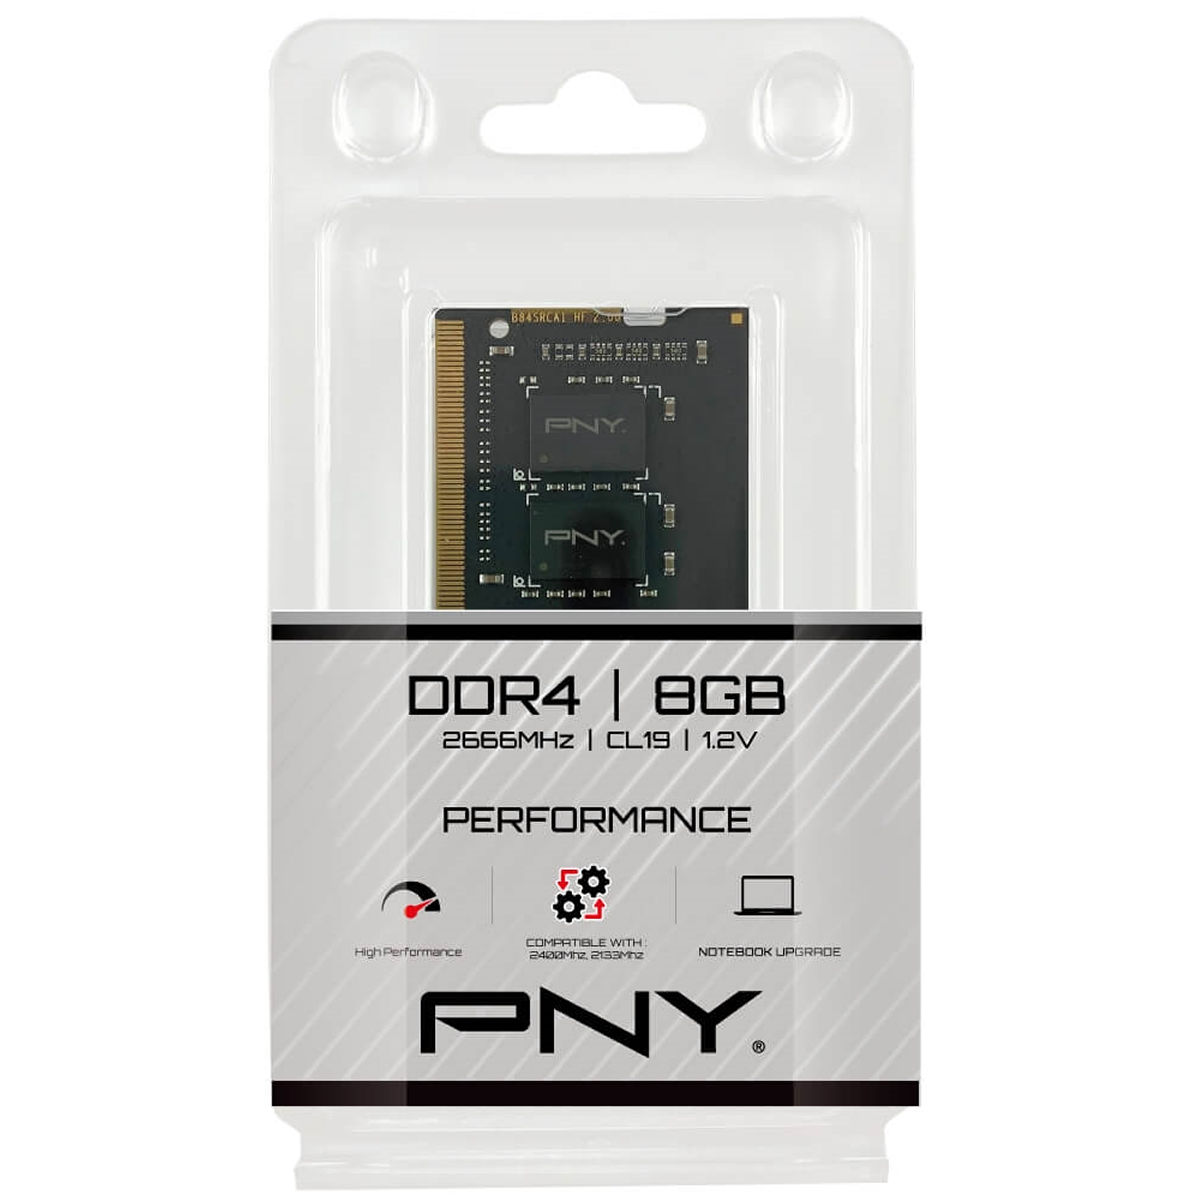 SODIMM DDR4 8GB 2666 PNY CL19 1.2V MN8GSD42666-TB